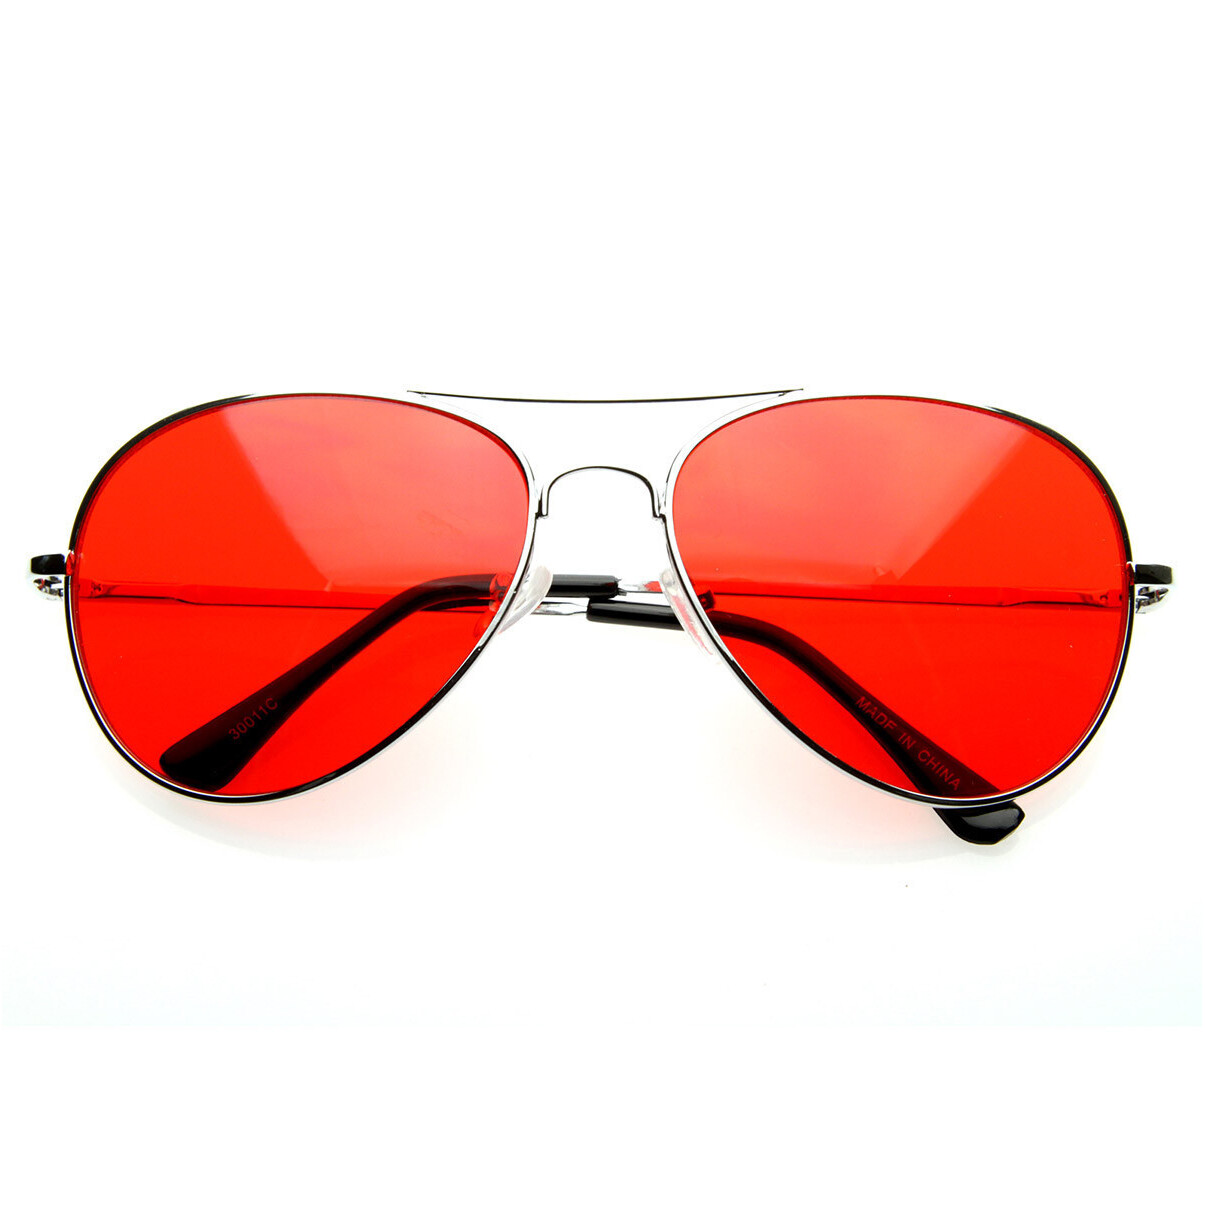 Colorful Premium Silver Metal Aviator Glasses With Color Lens Sunglasses - 8405 - Purple